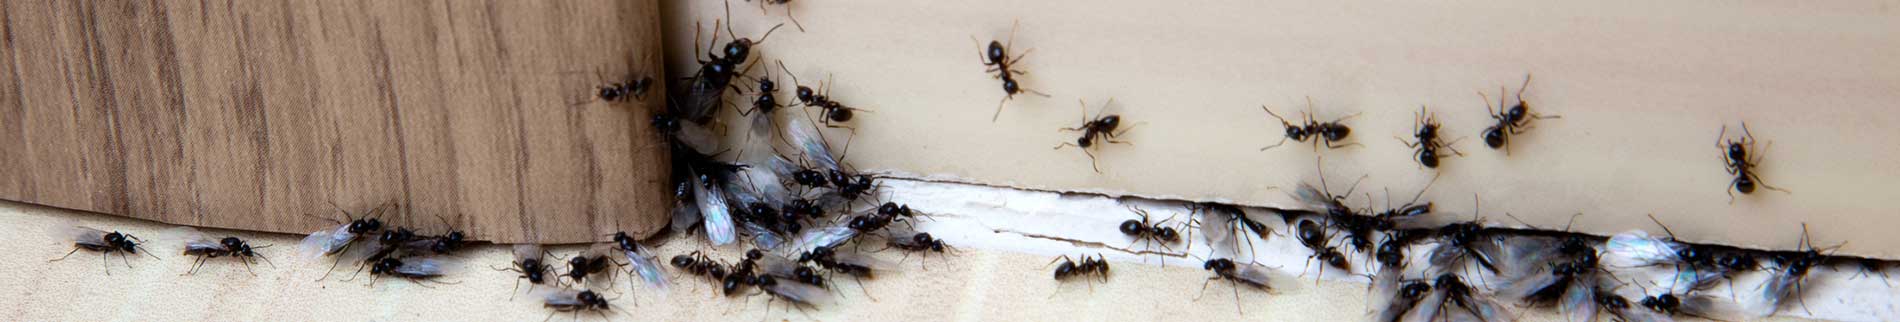 ant elimination services